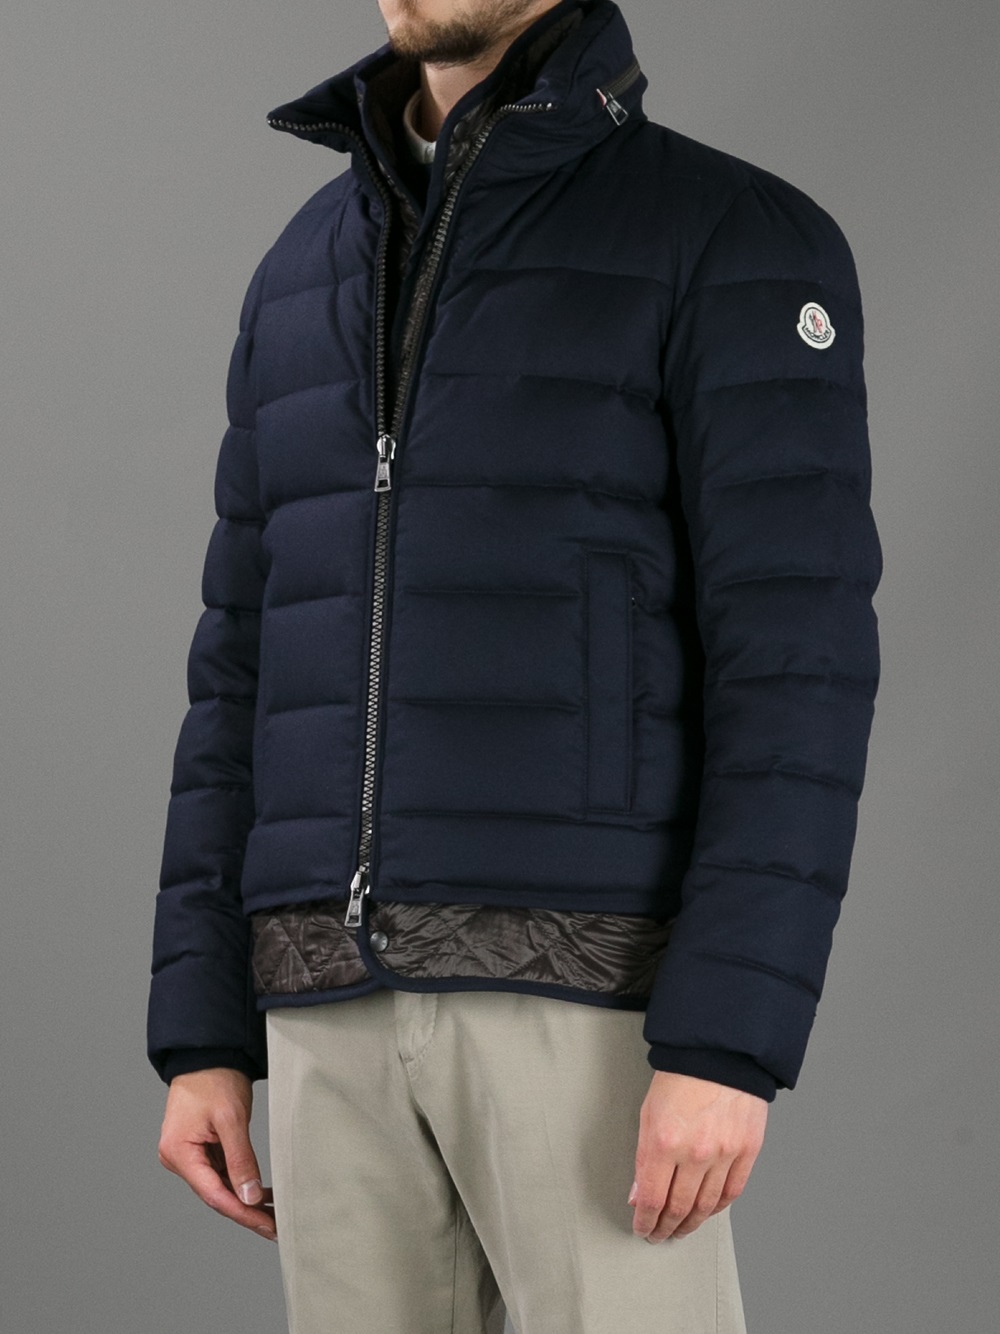 Moncler Tierce Jacket in Blue for Men - Lyst